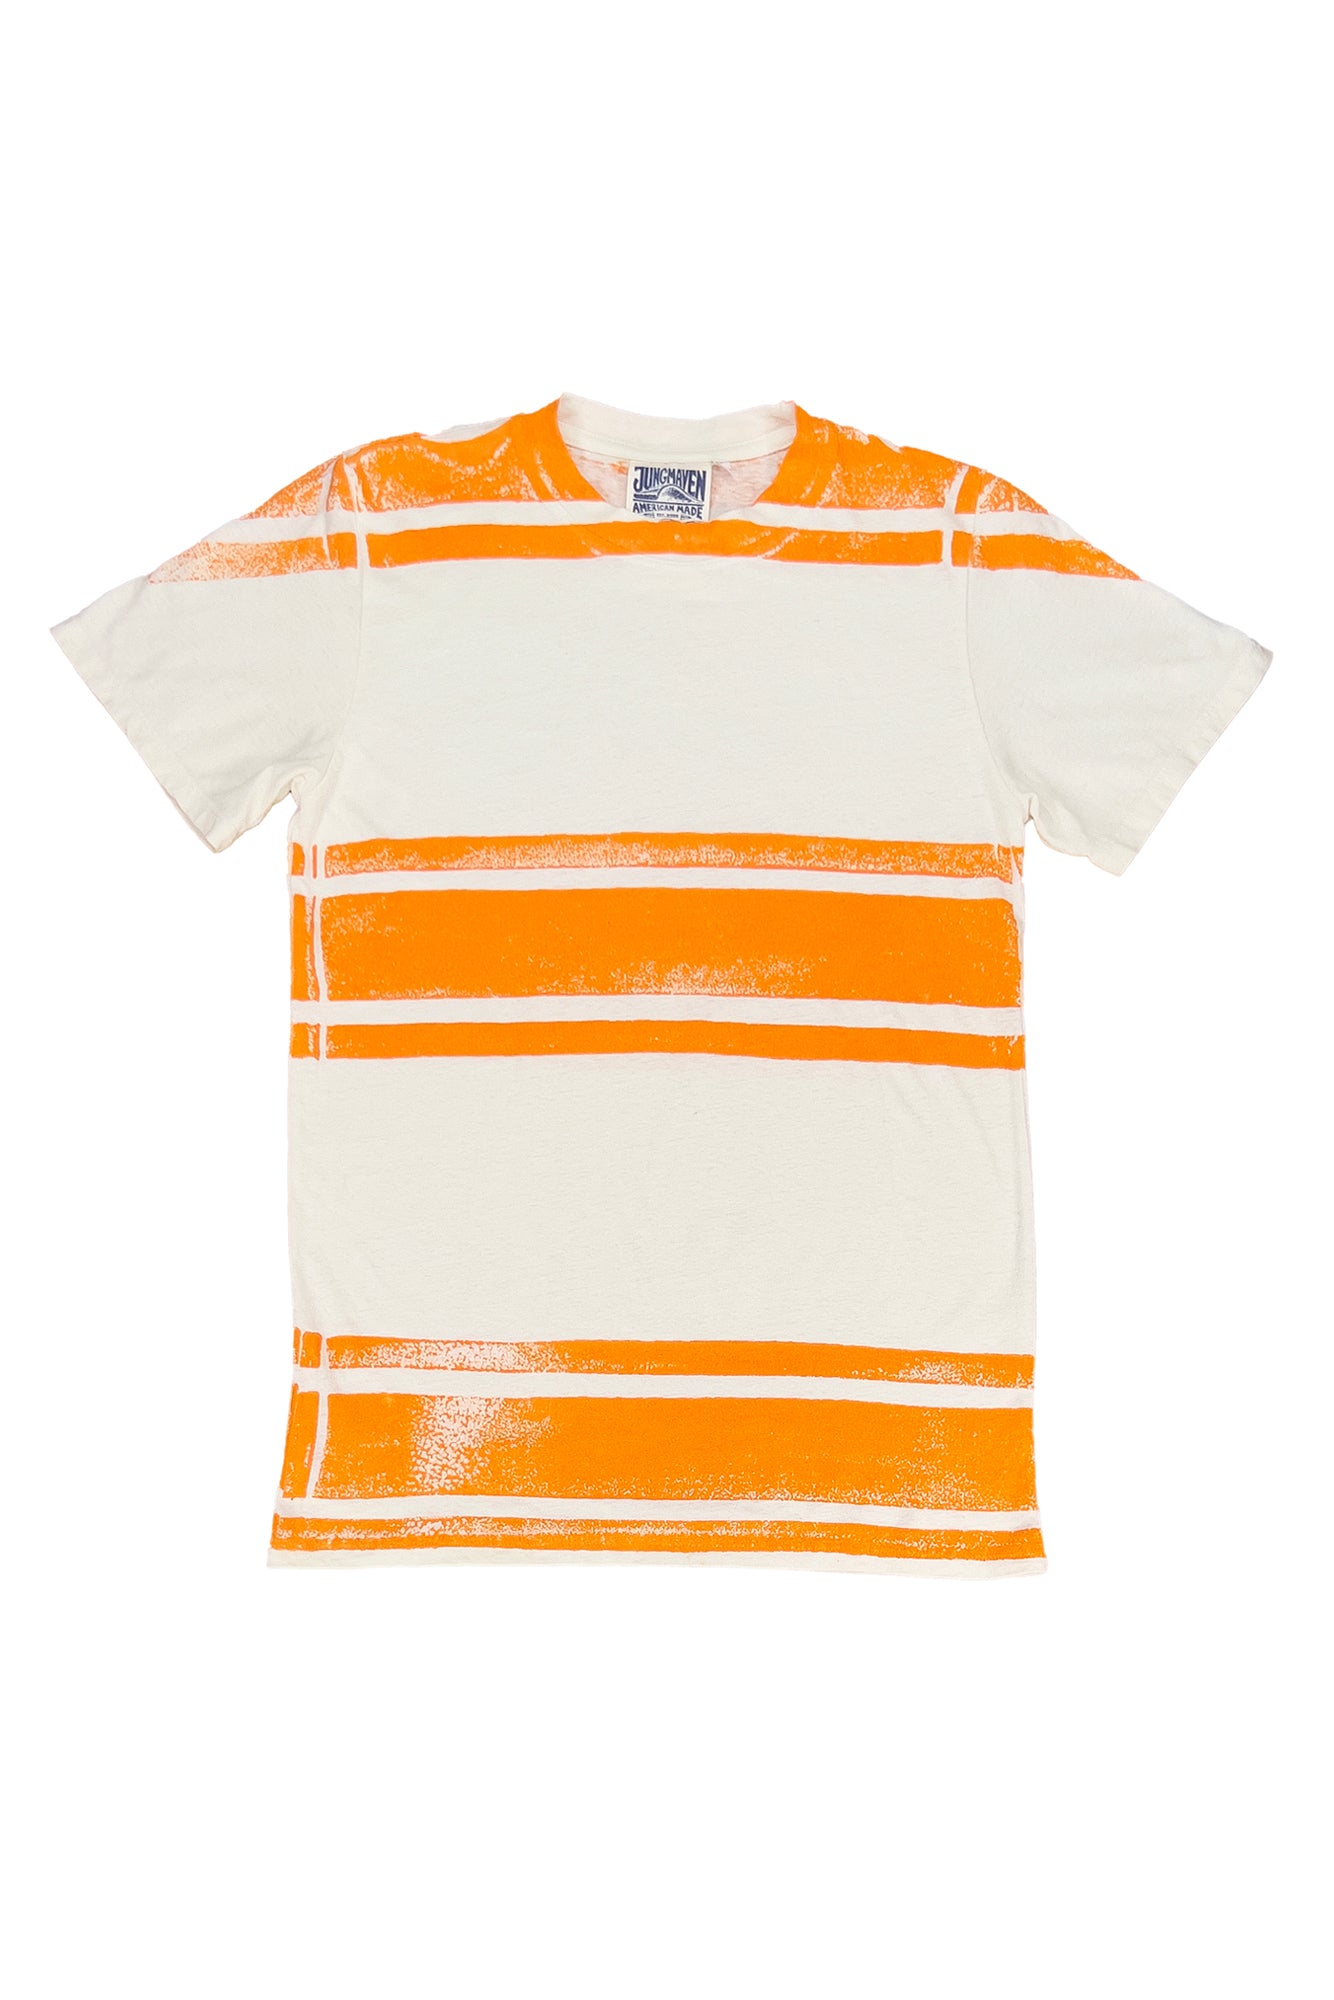 Three Stripe Jung Tee | Jungmaven Hemp Clothing & Accessories / Color: Apricot Crush